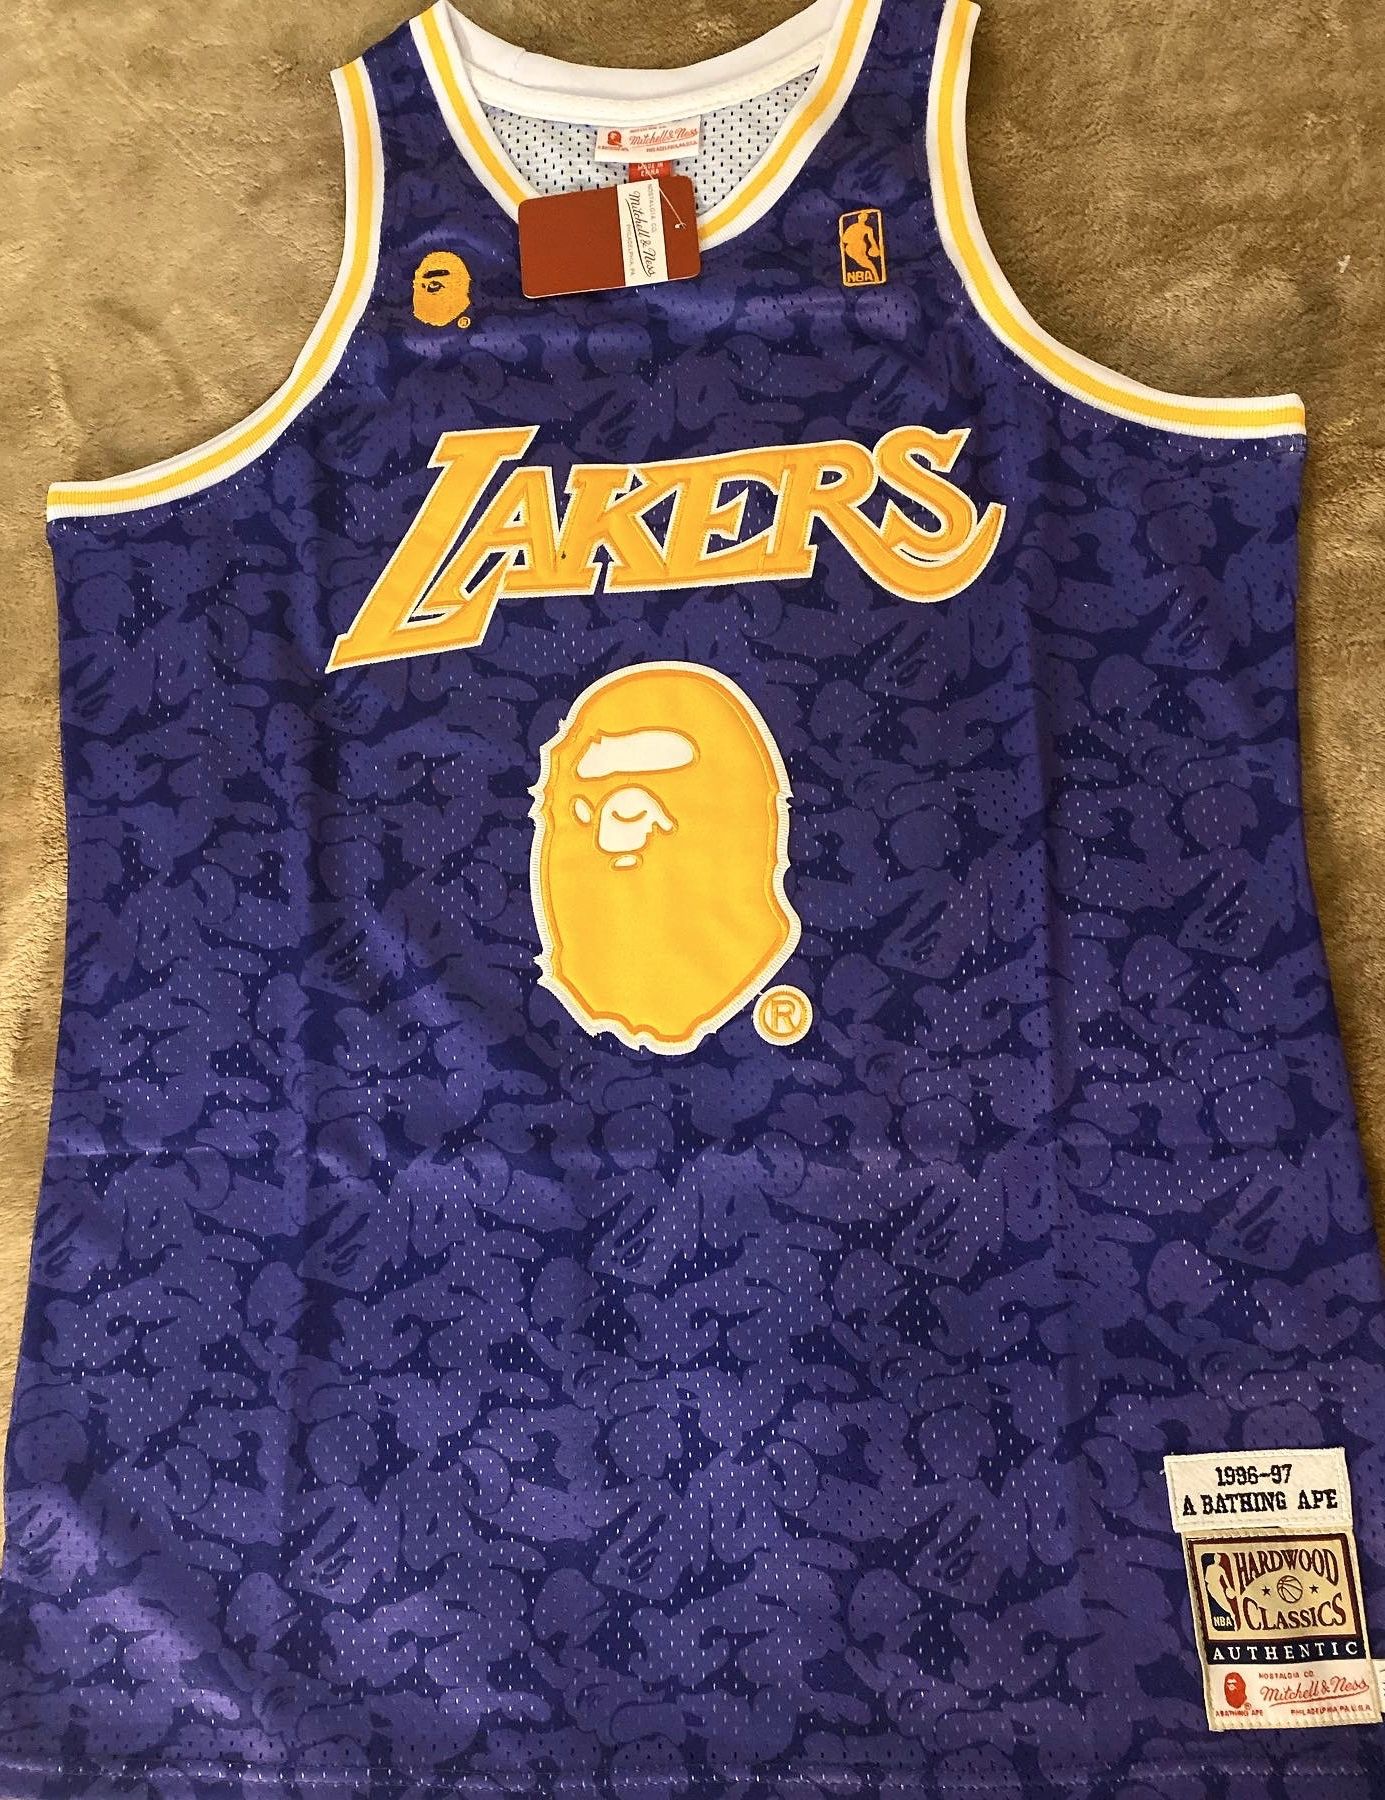 Bape Lakers jersey